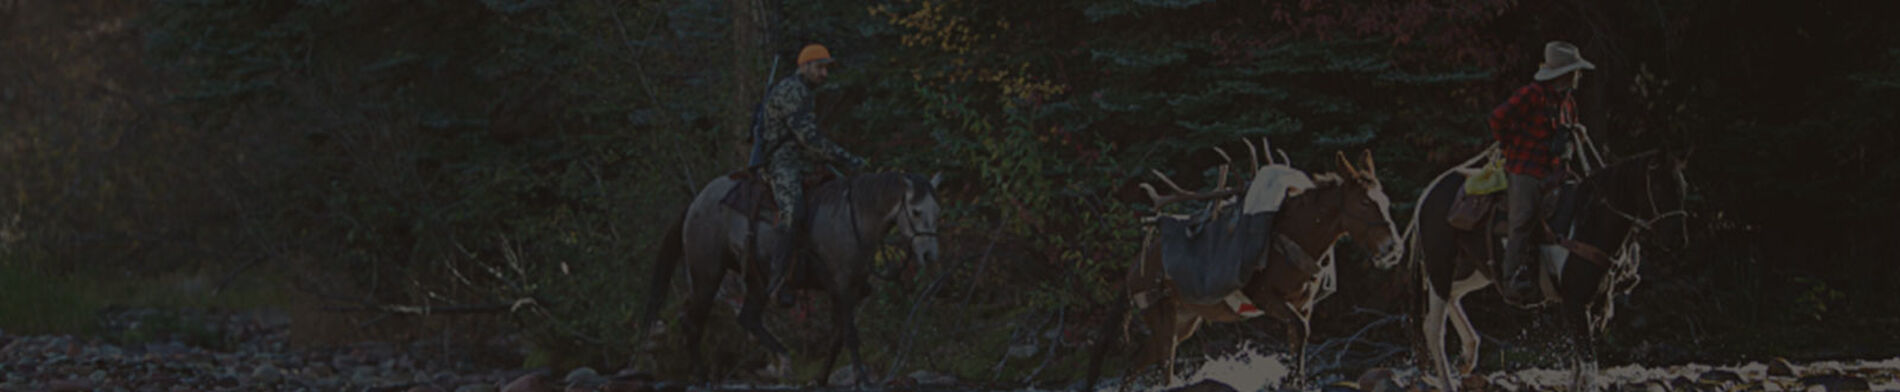 Hunters on Horseback